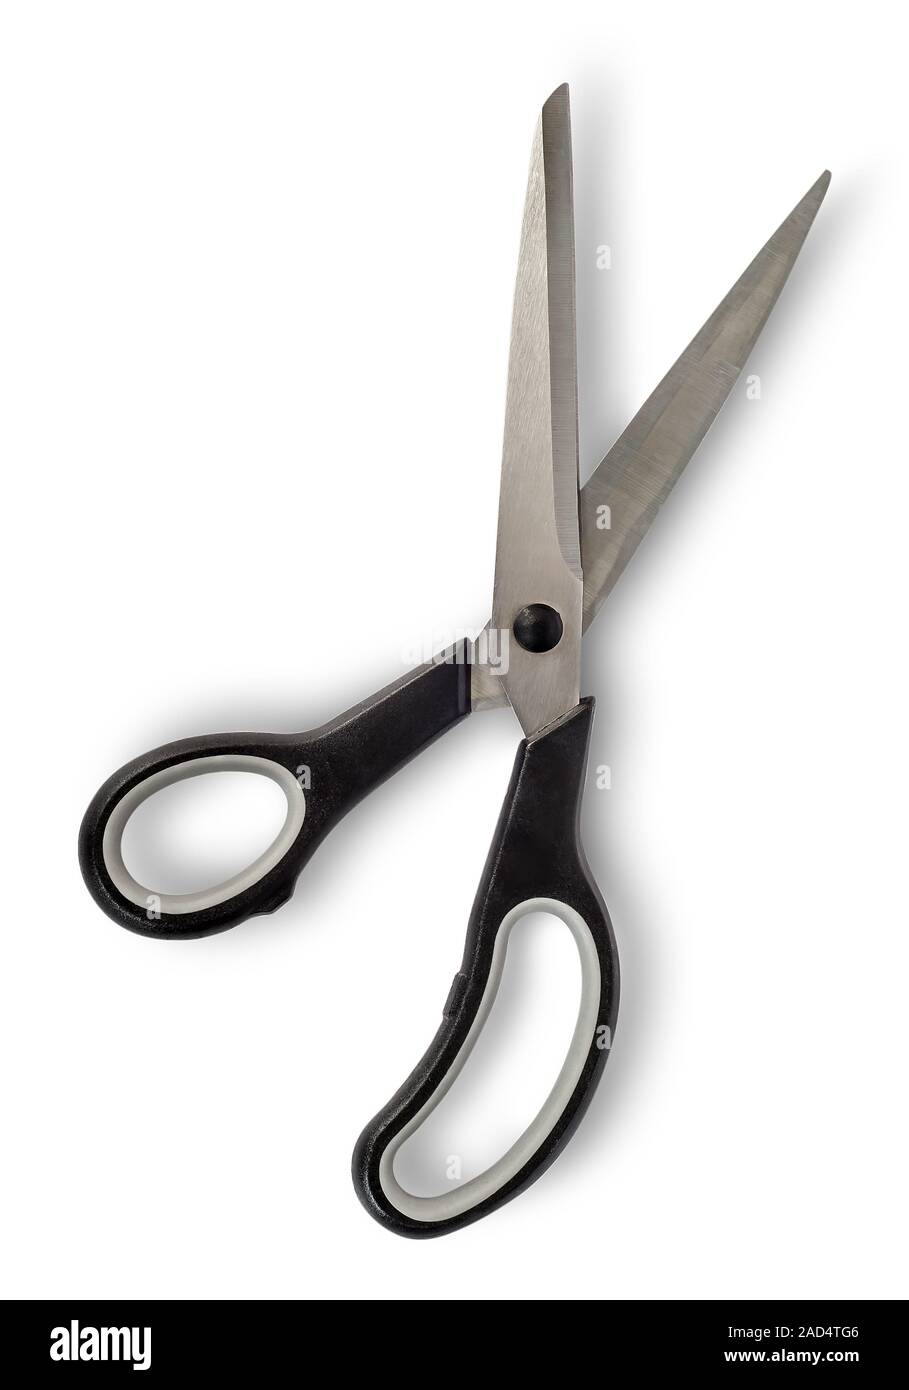 File:Large-scissors.jpg - Wikipedia